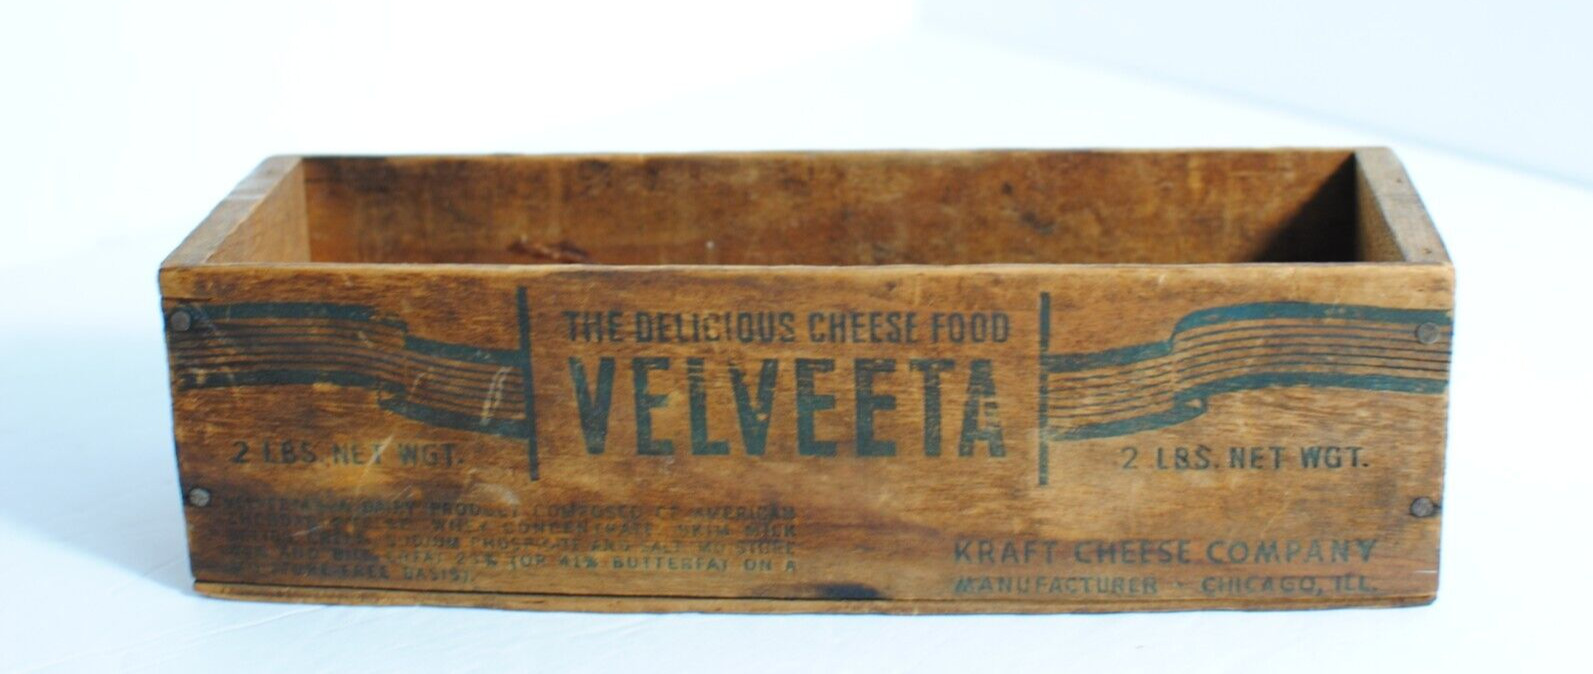 Vintage Velveeta Cheese Wooden Box Delicious Cheese Food 2 LB. Container